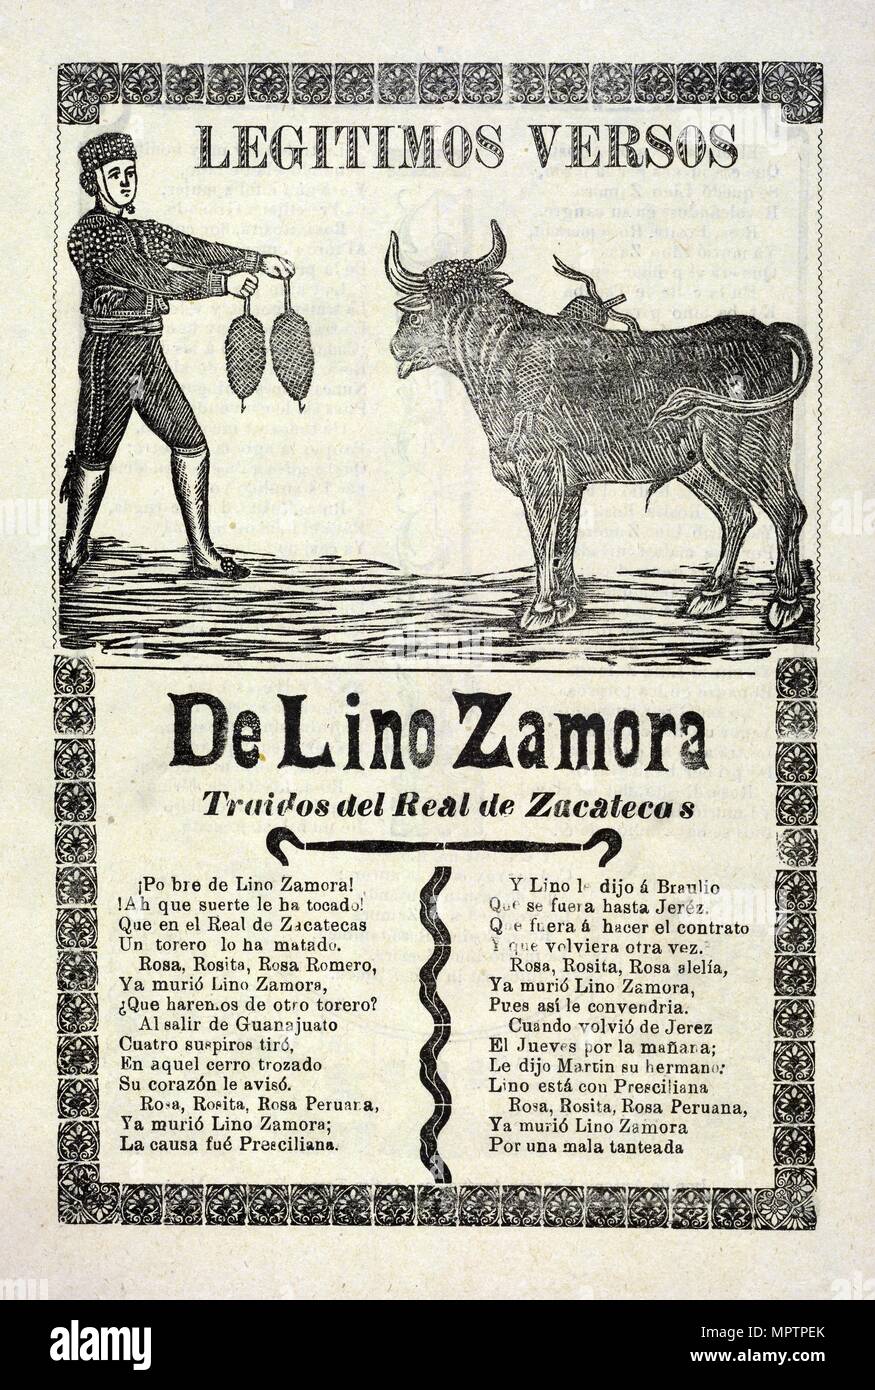 Legítimos versos de Lino Zamora traidos del Real de Zacatecas, 1903. Stock Photo